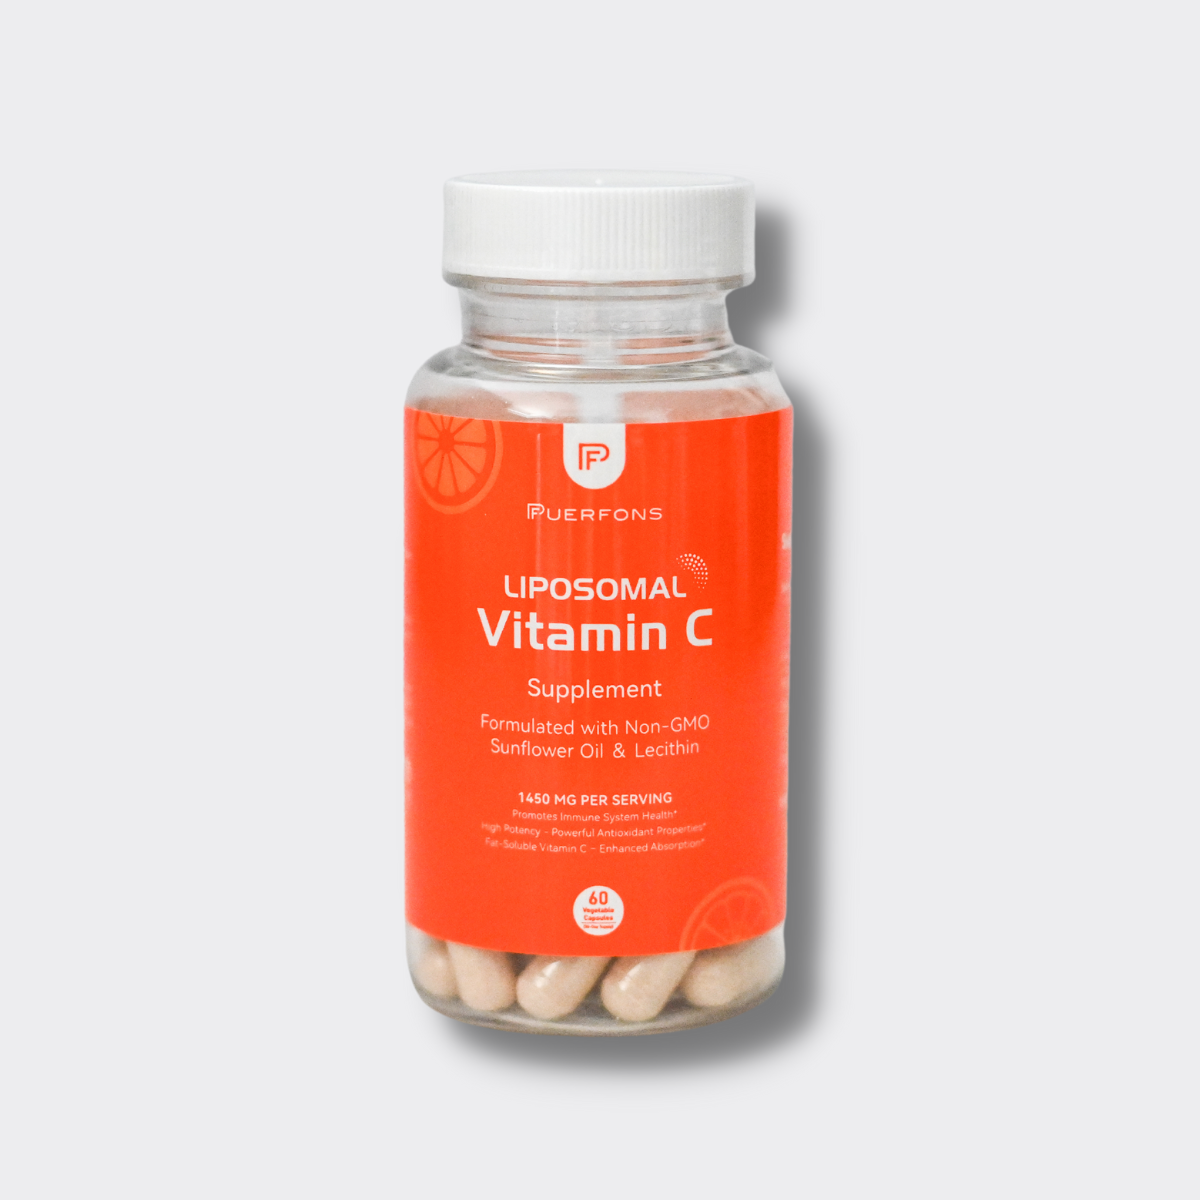 PUERFONS Liposomal Vitamin C Capsules